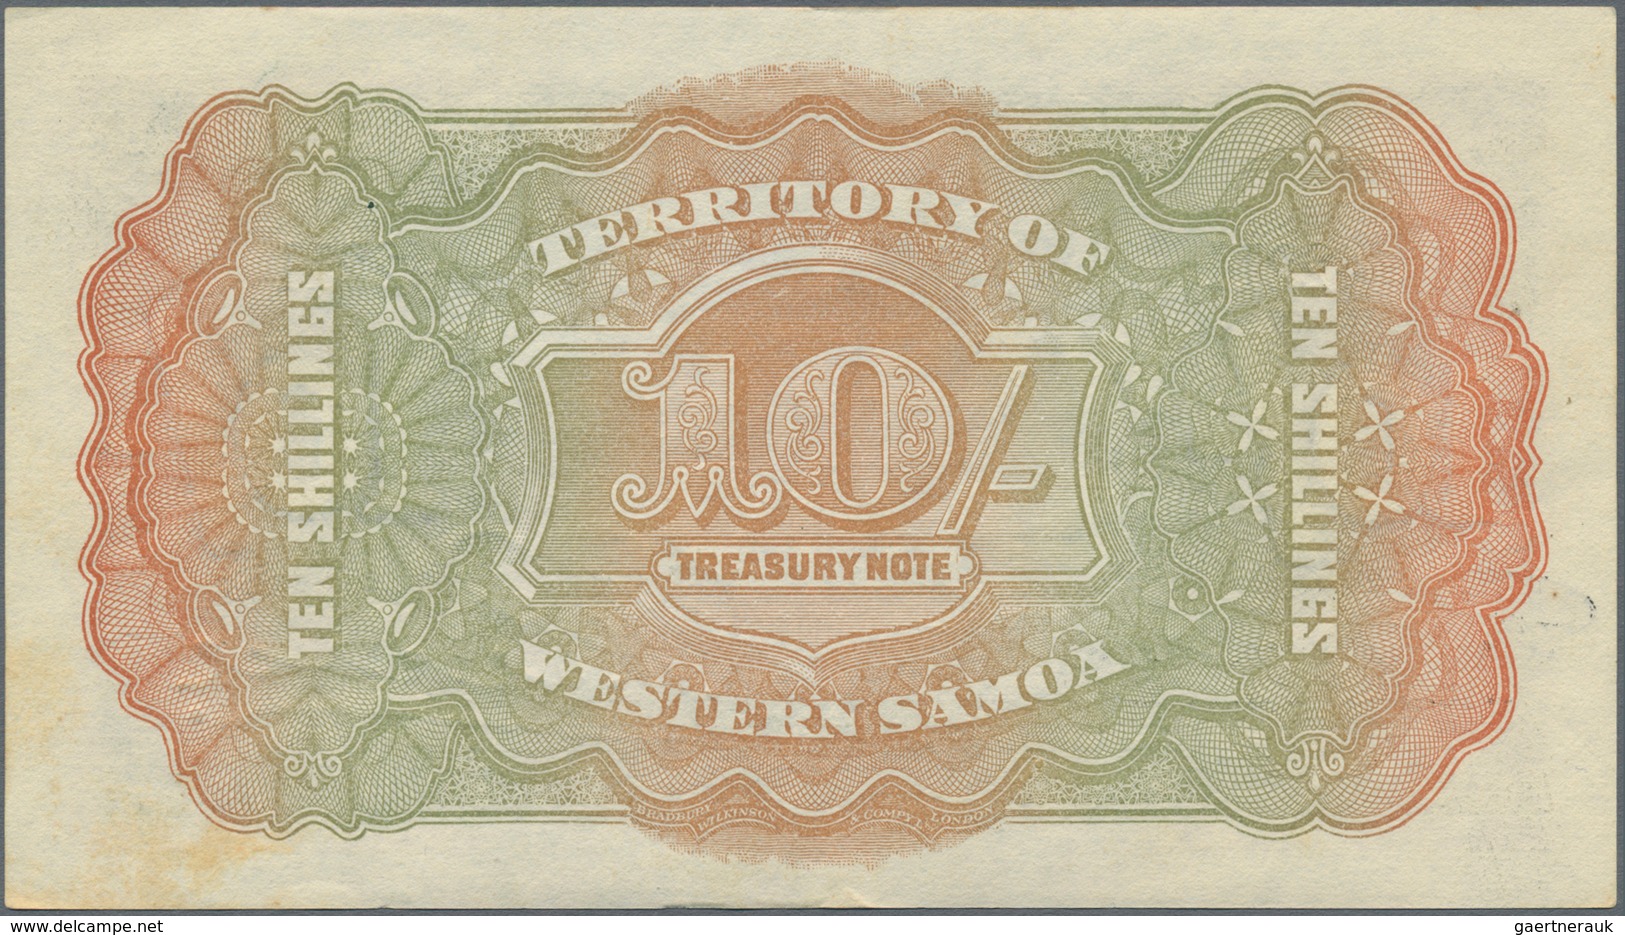 Western Samoa / West-Samoa: Territory Of Western Samoa 10 Shillings 1944, P.7c, Great Original Shape - Samoa